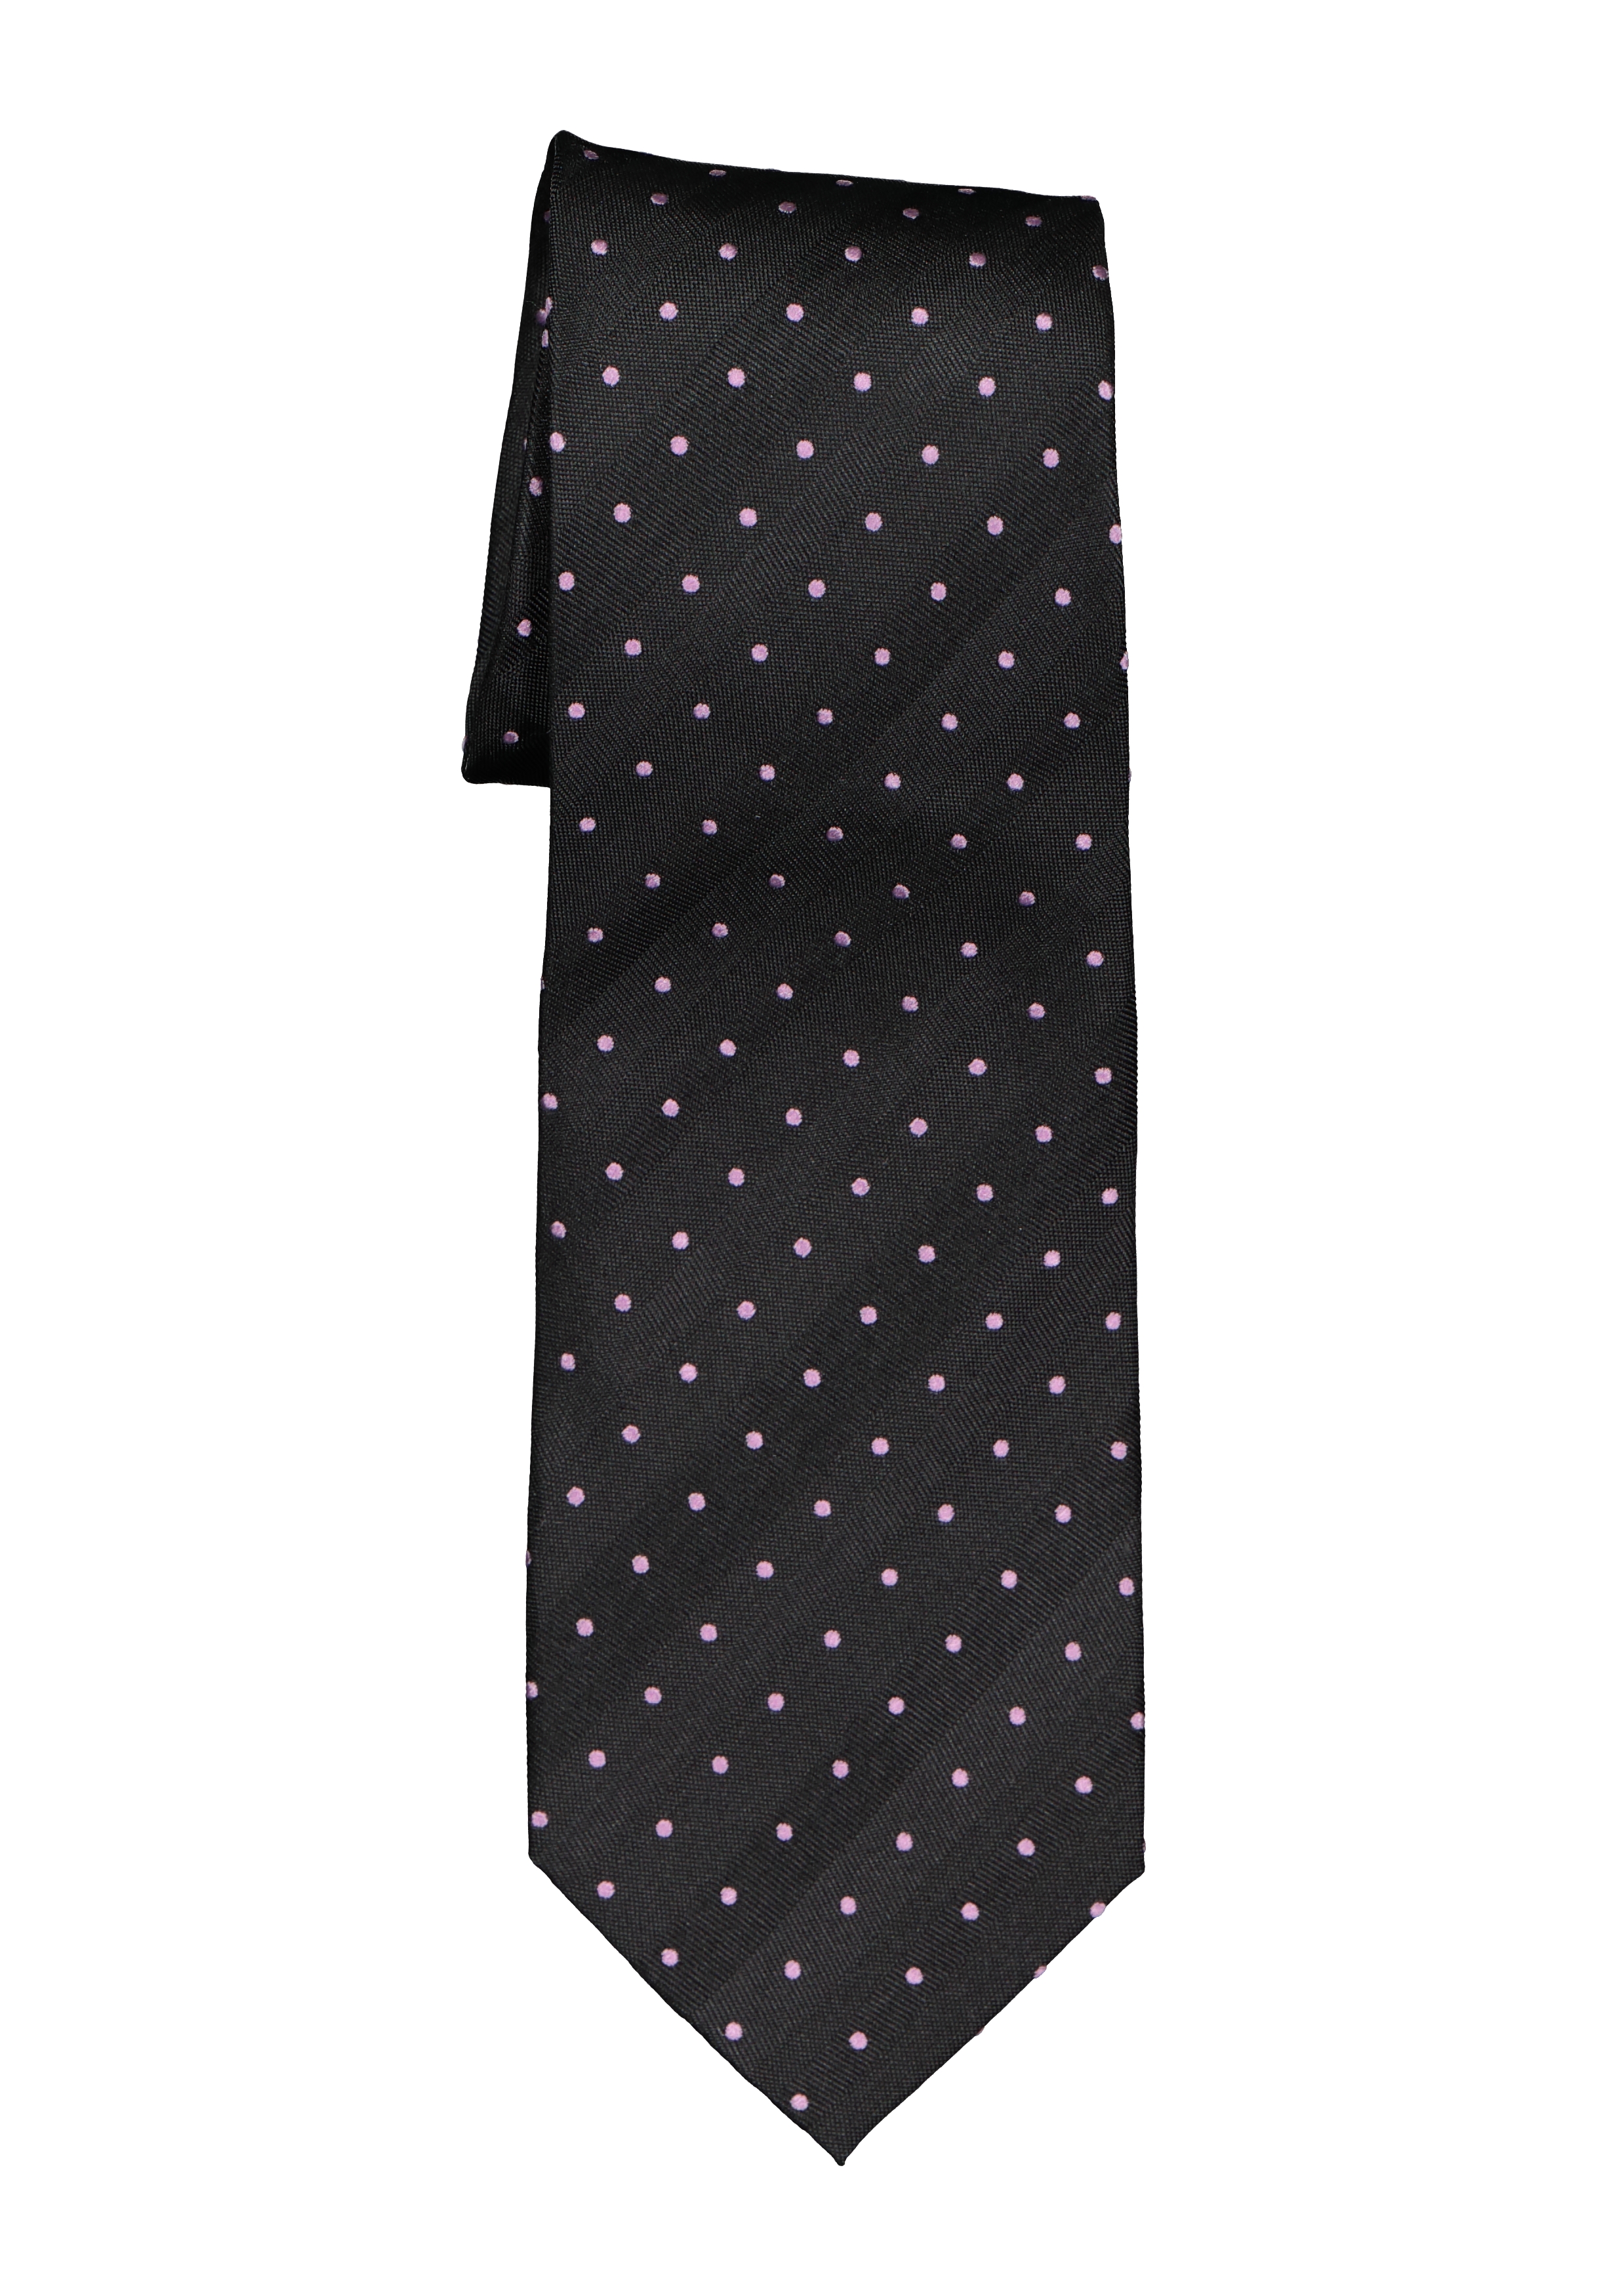 Eterna  stropdas, zwart met roze stip     